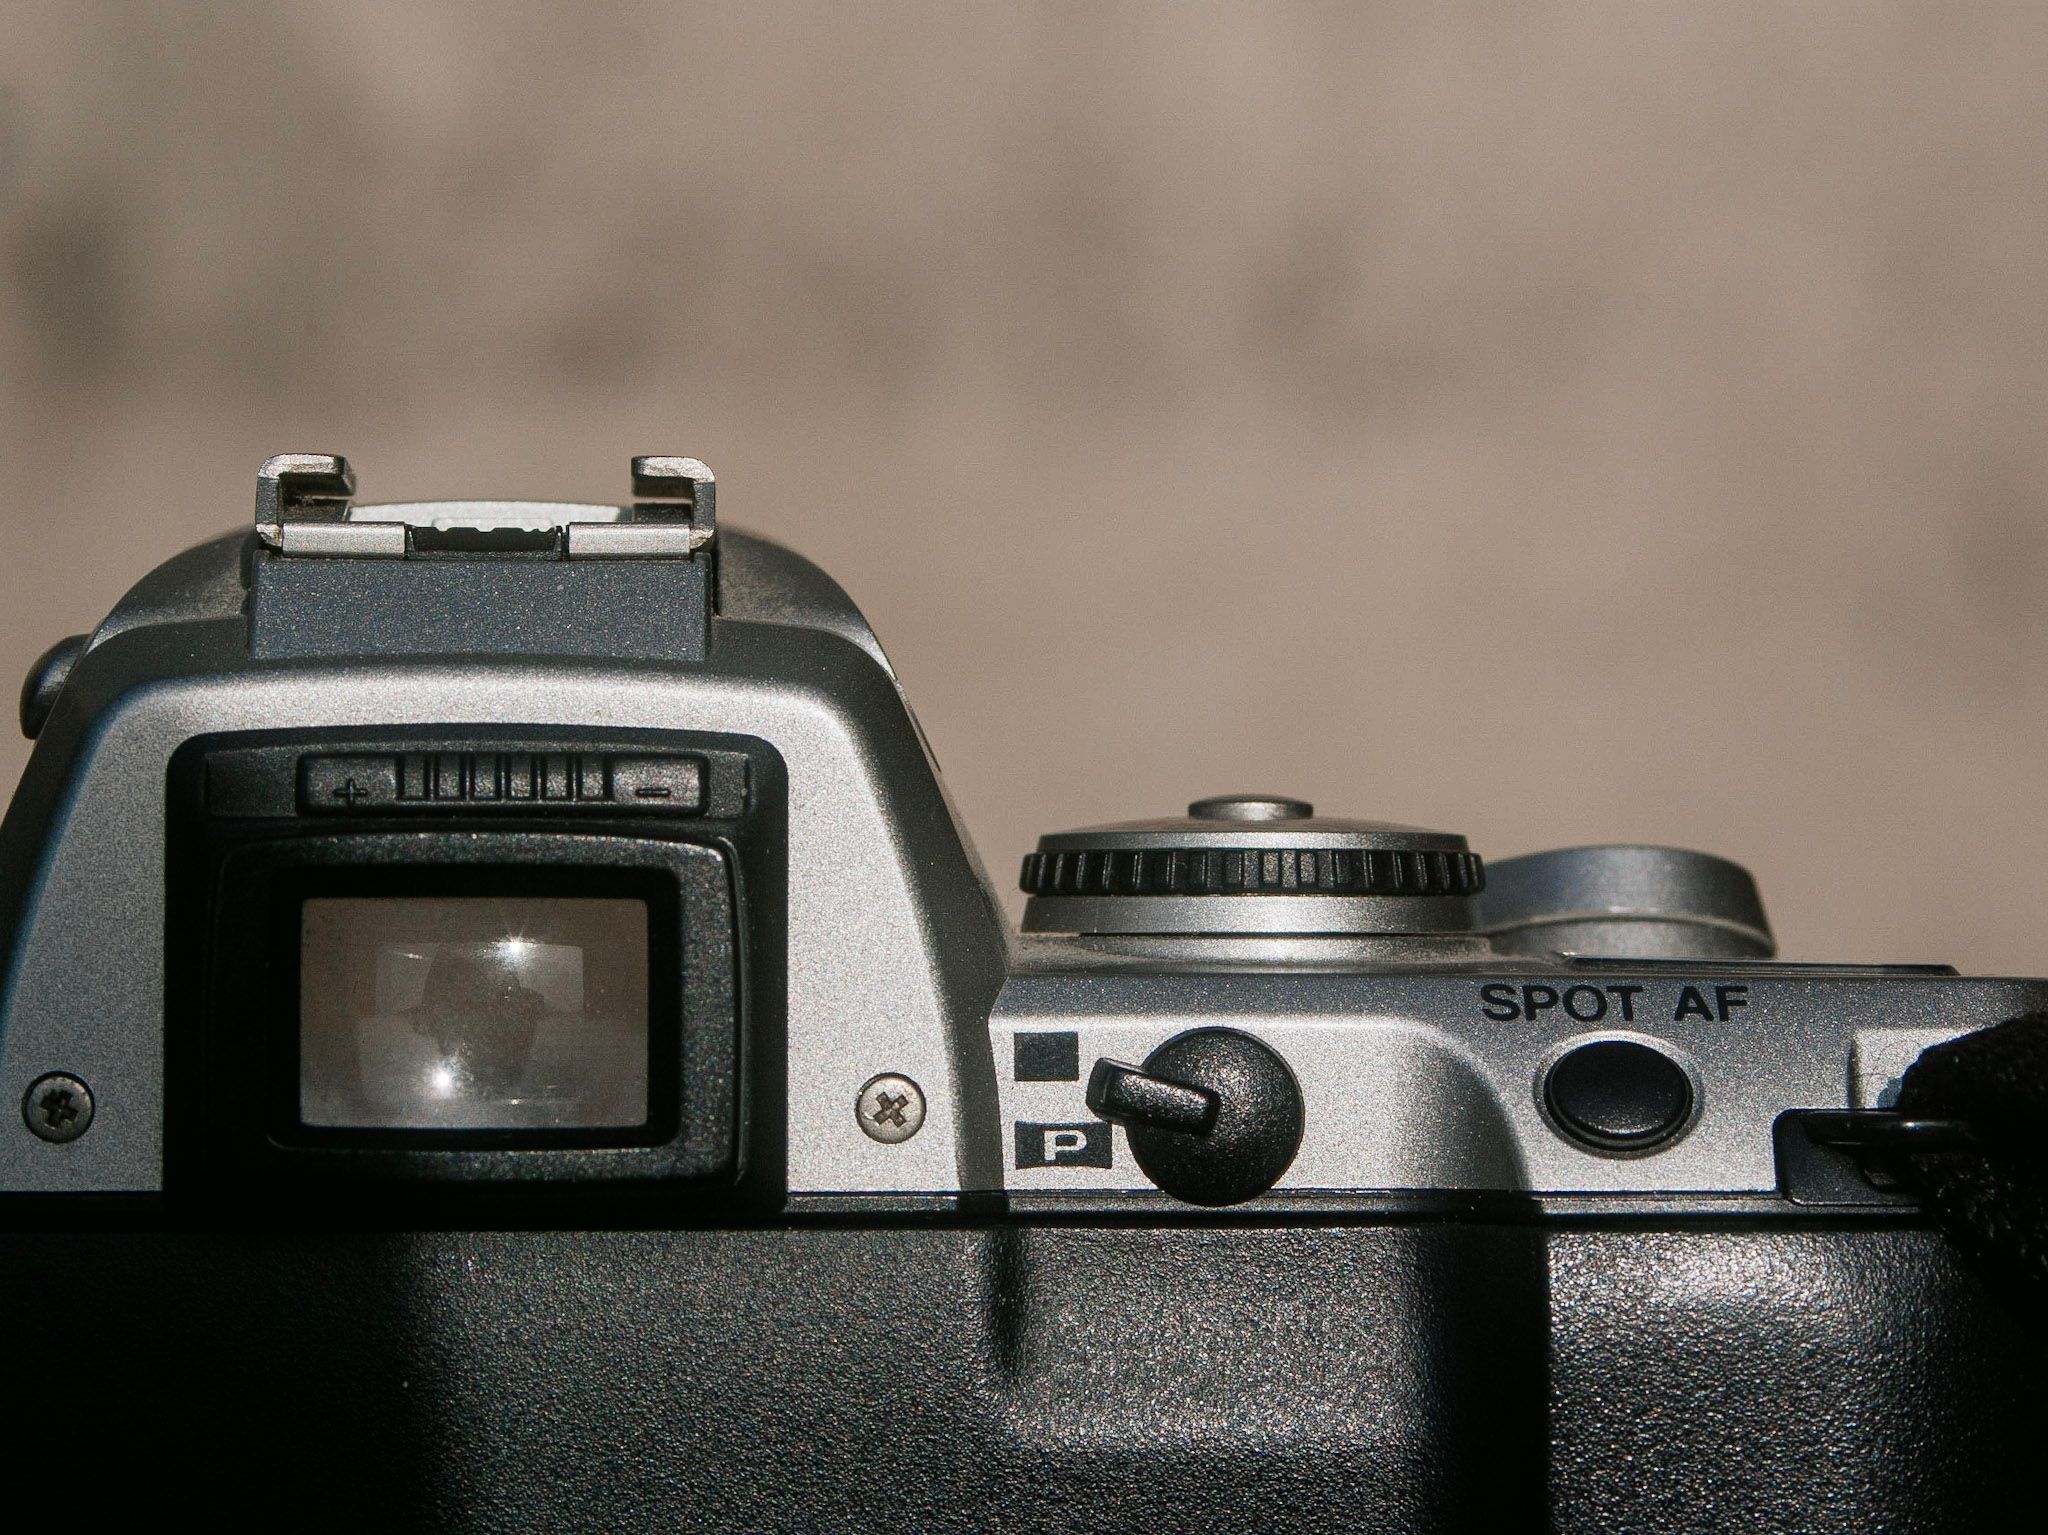 Pentax MZ-5 / ZX-5 35mm Film Camera Review - 50mmF2